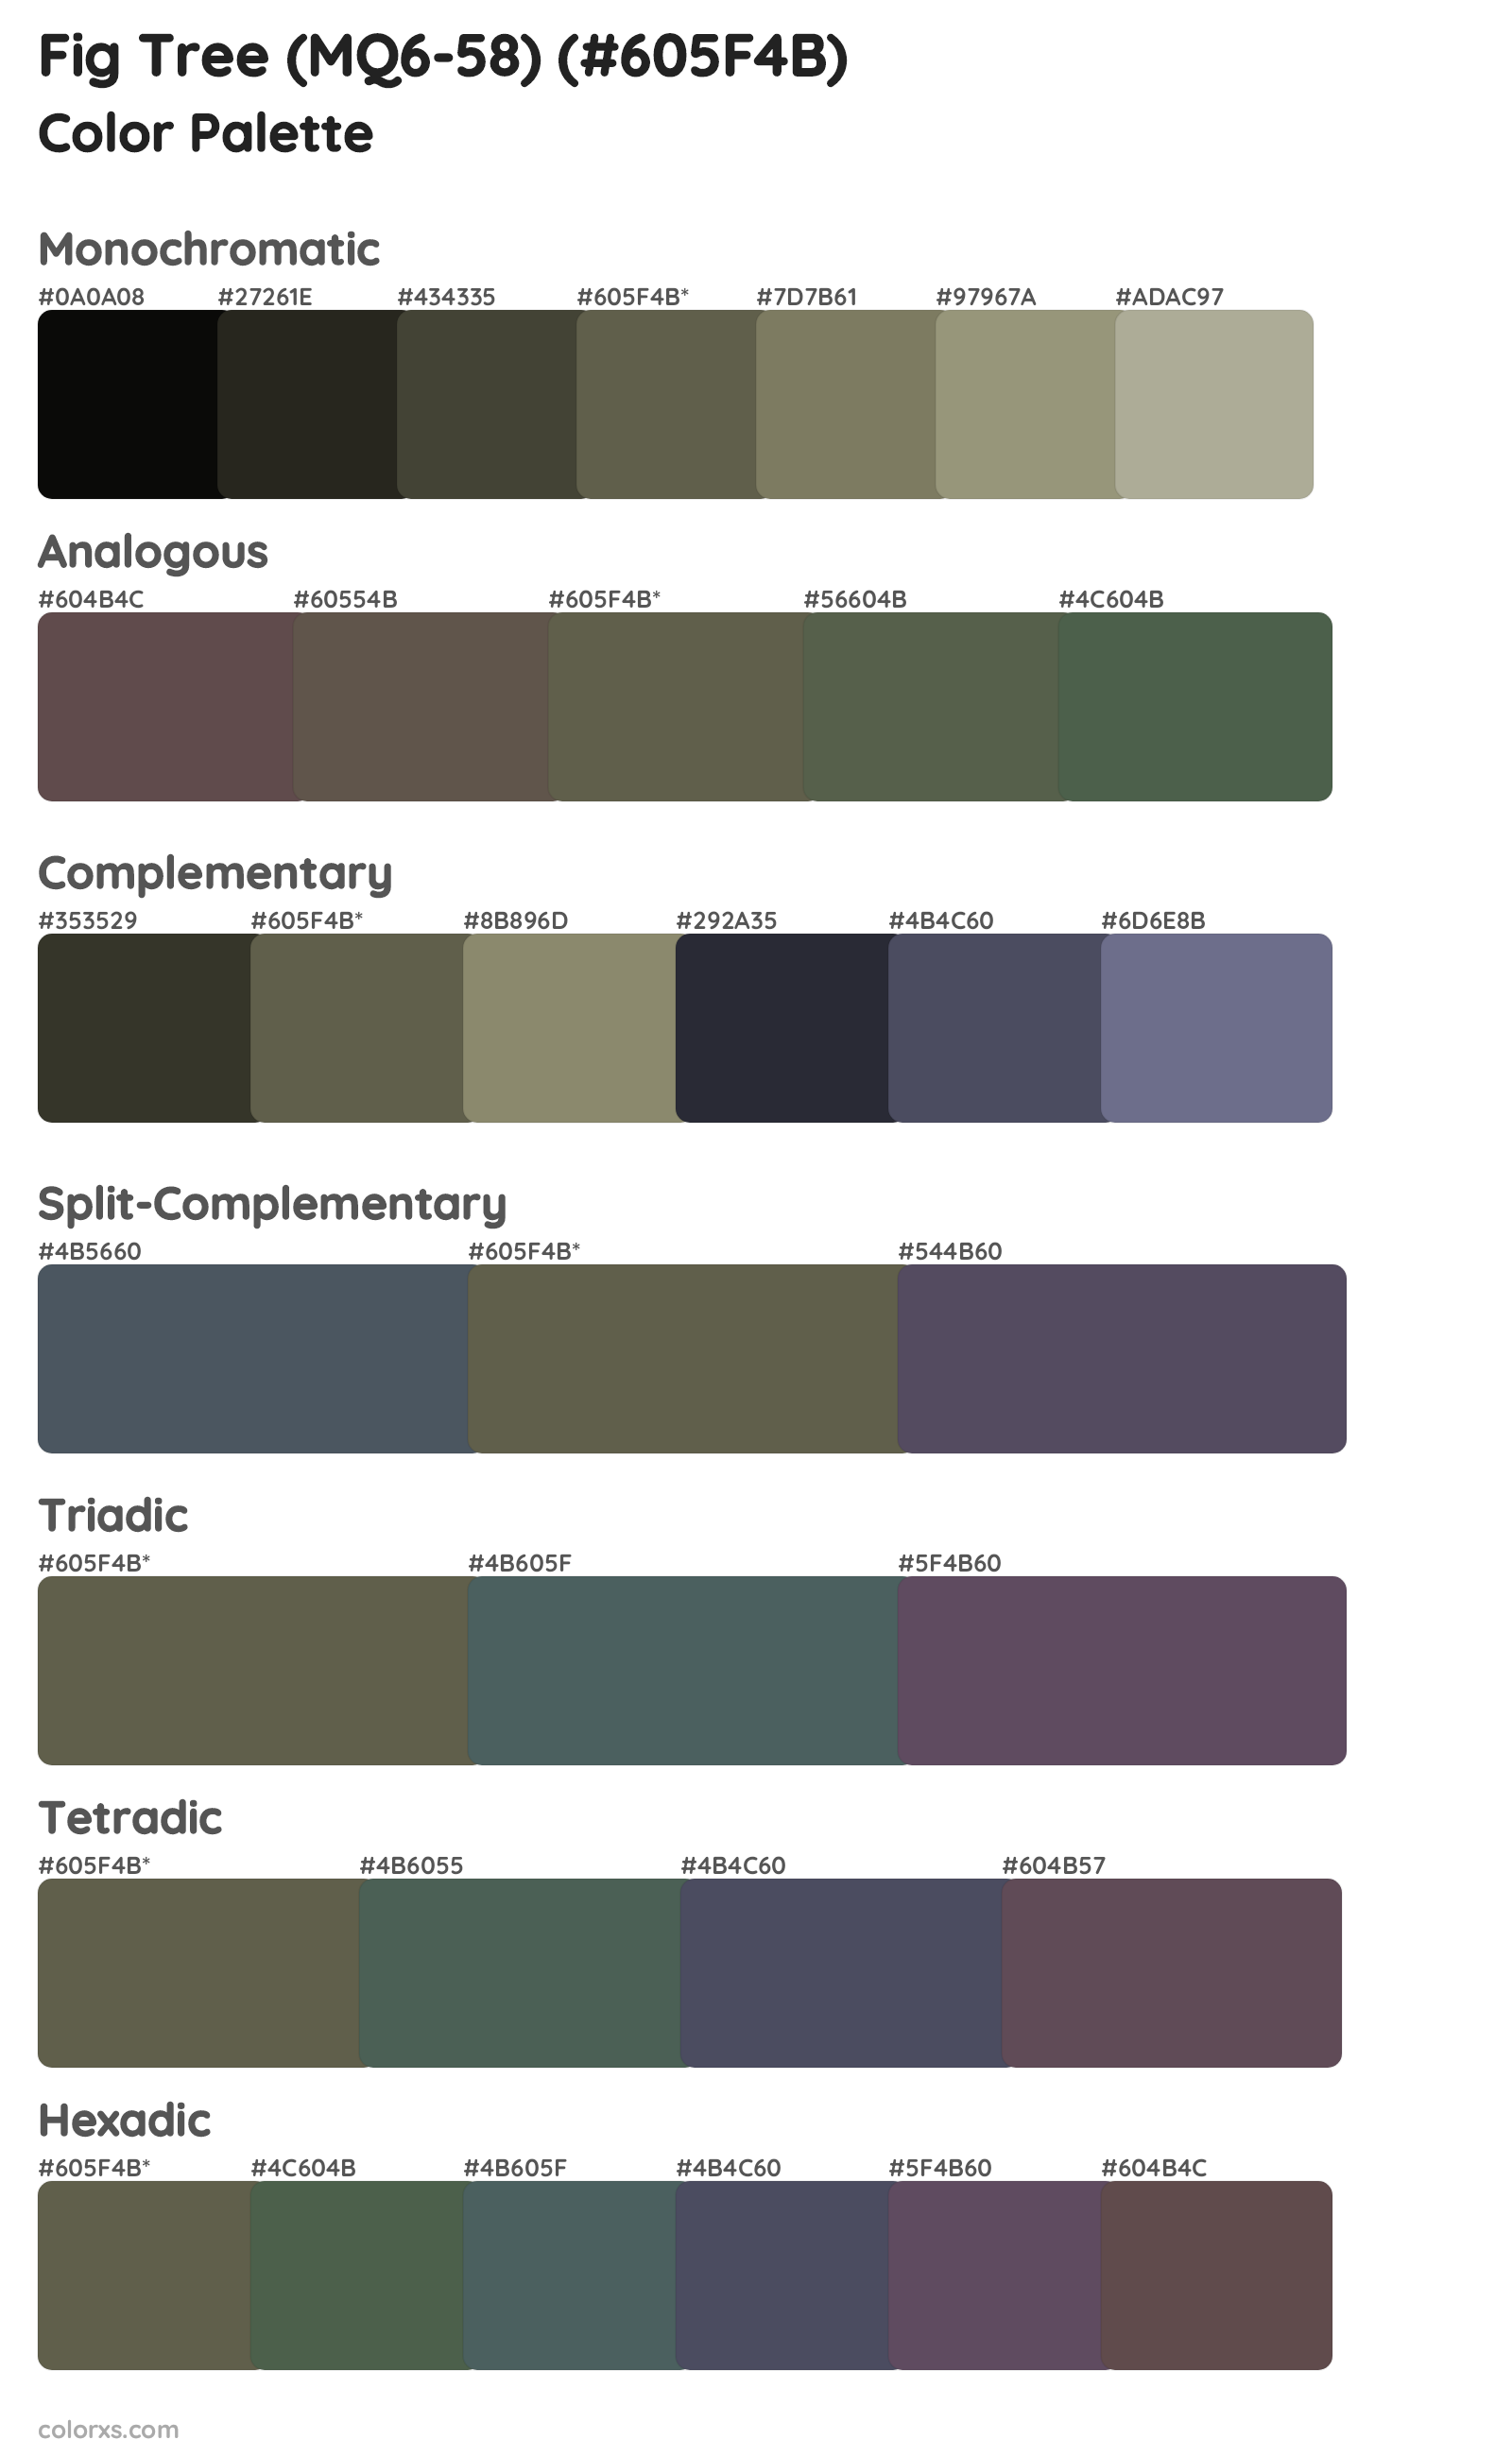 Fig Tree (MQ6-58) Color Scheme Palettes